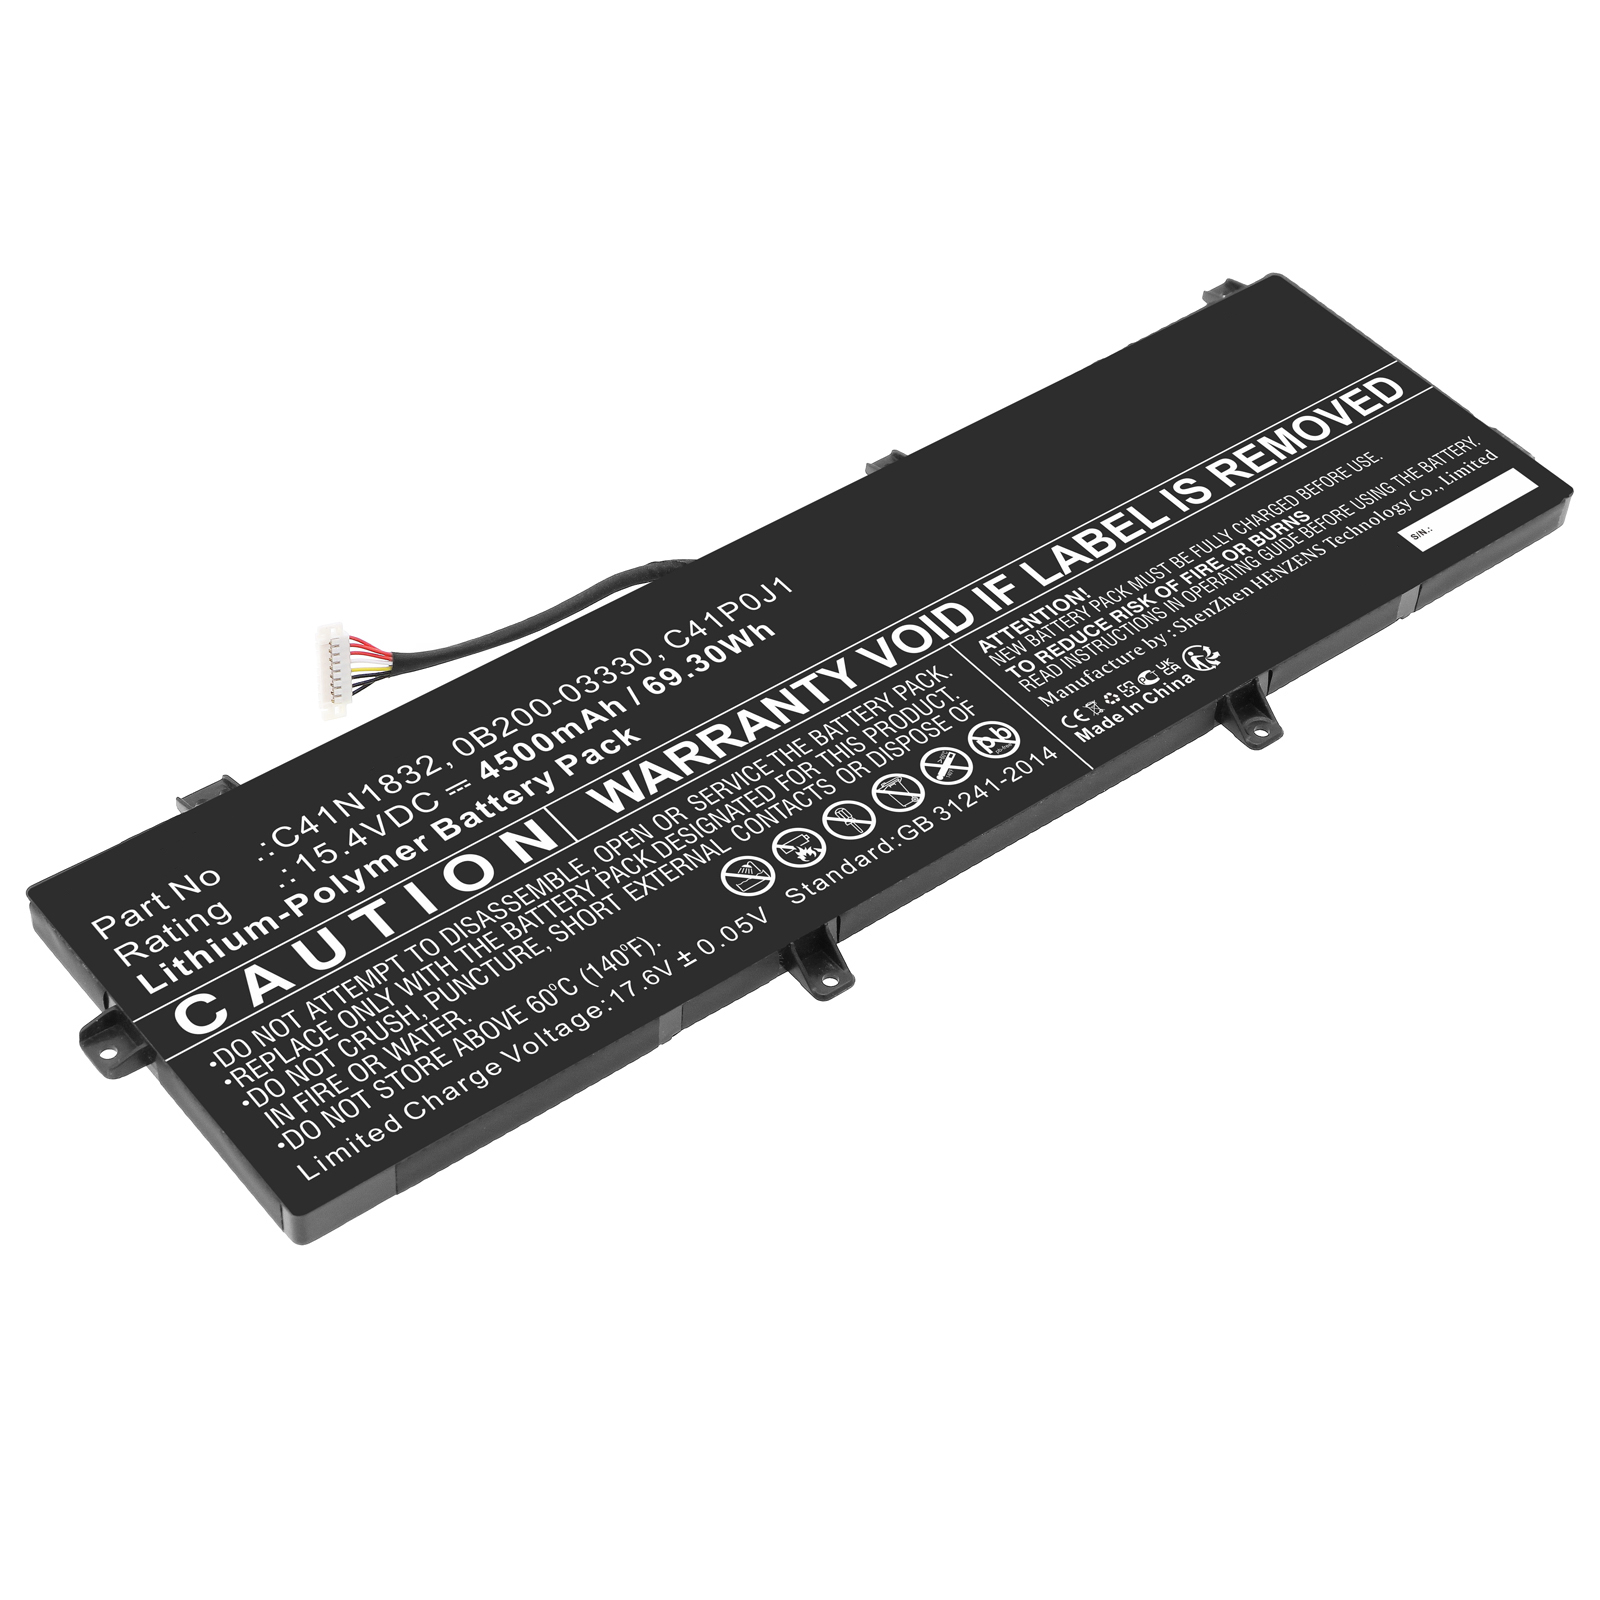 Synergy Digital Laptop Battery, Compatible with Asus 0B200-03330 Laptop Battery (Li-Pol, 15.4V, 4500mAh)